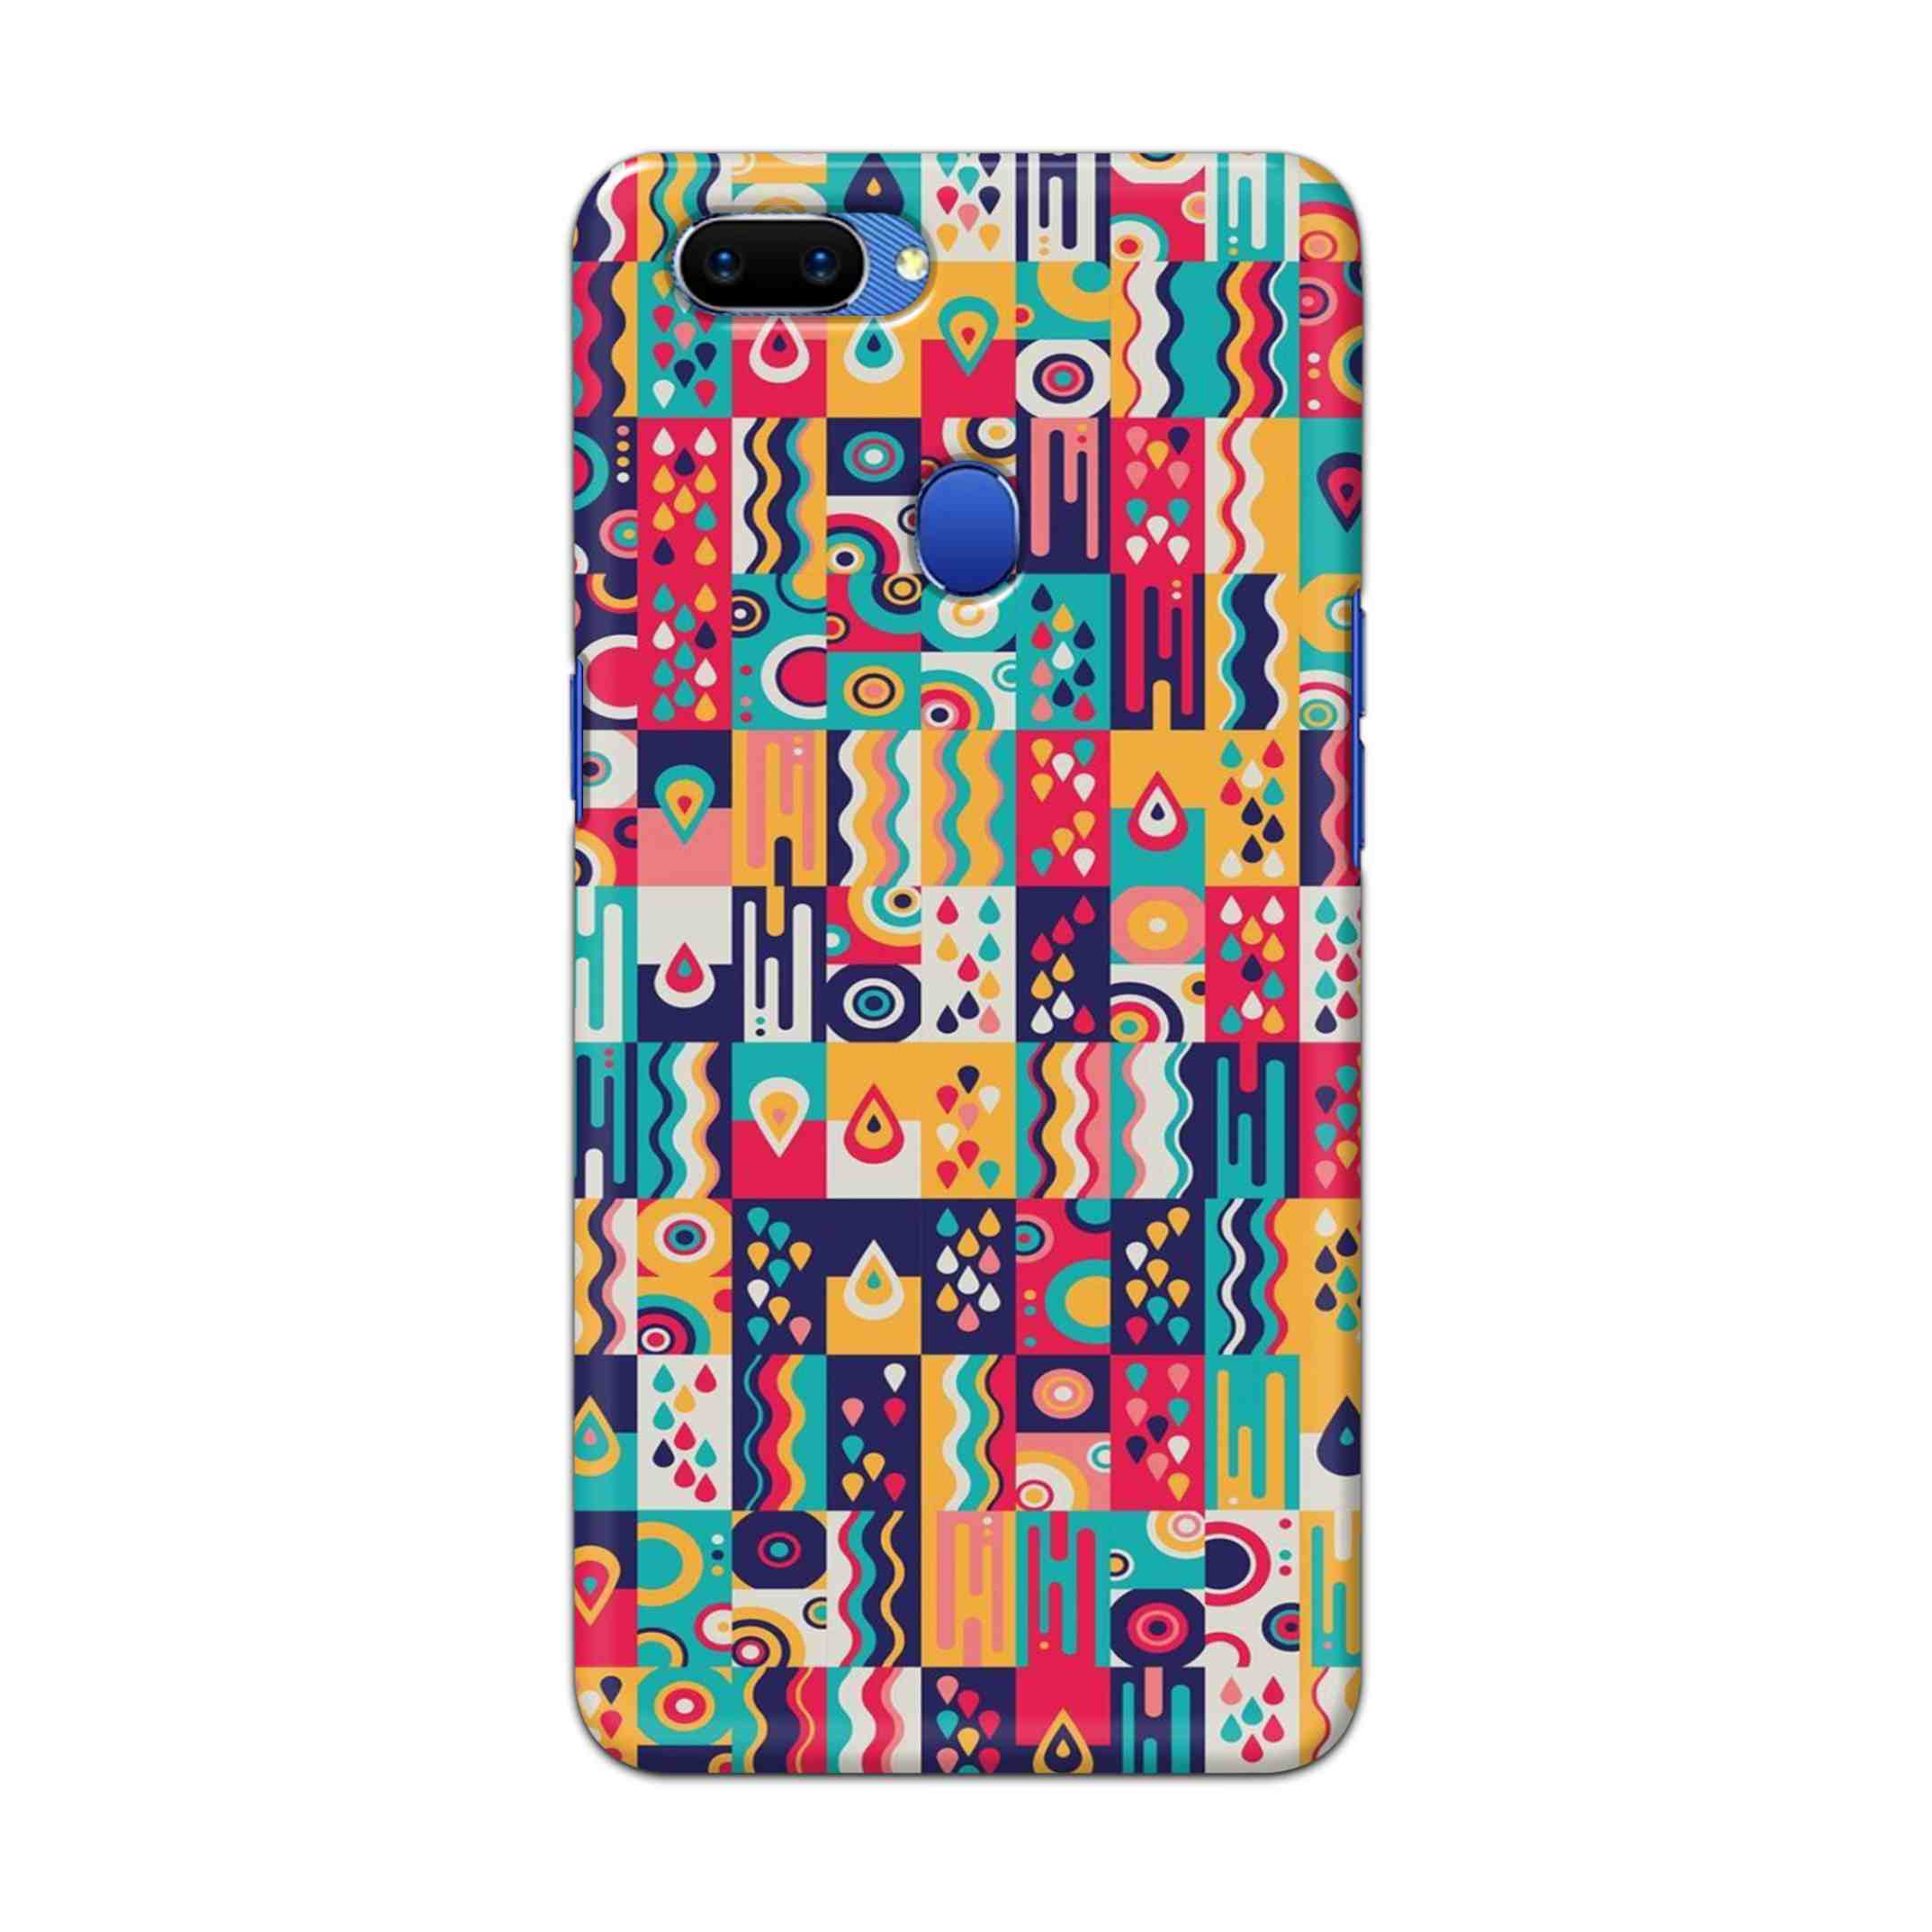 Buy Art Hard Back Mobile Phone Case Cover For Oppo A5 Online